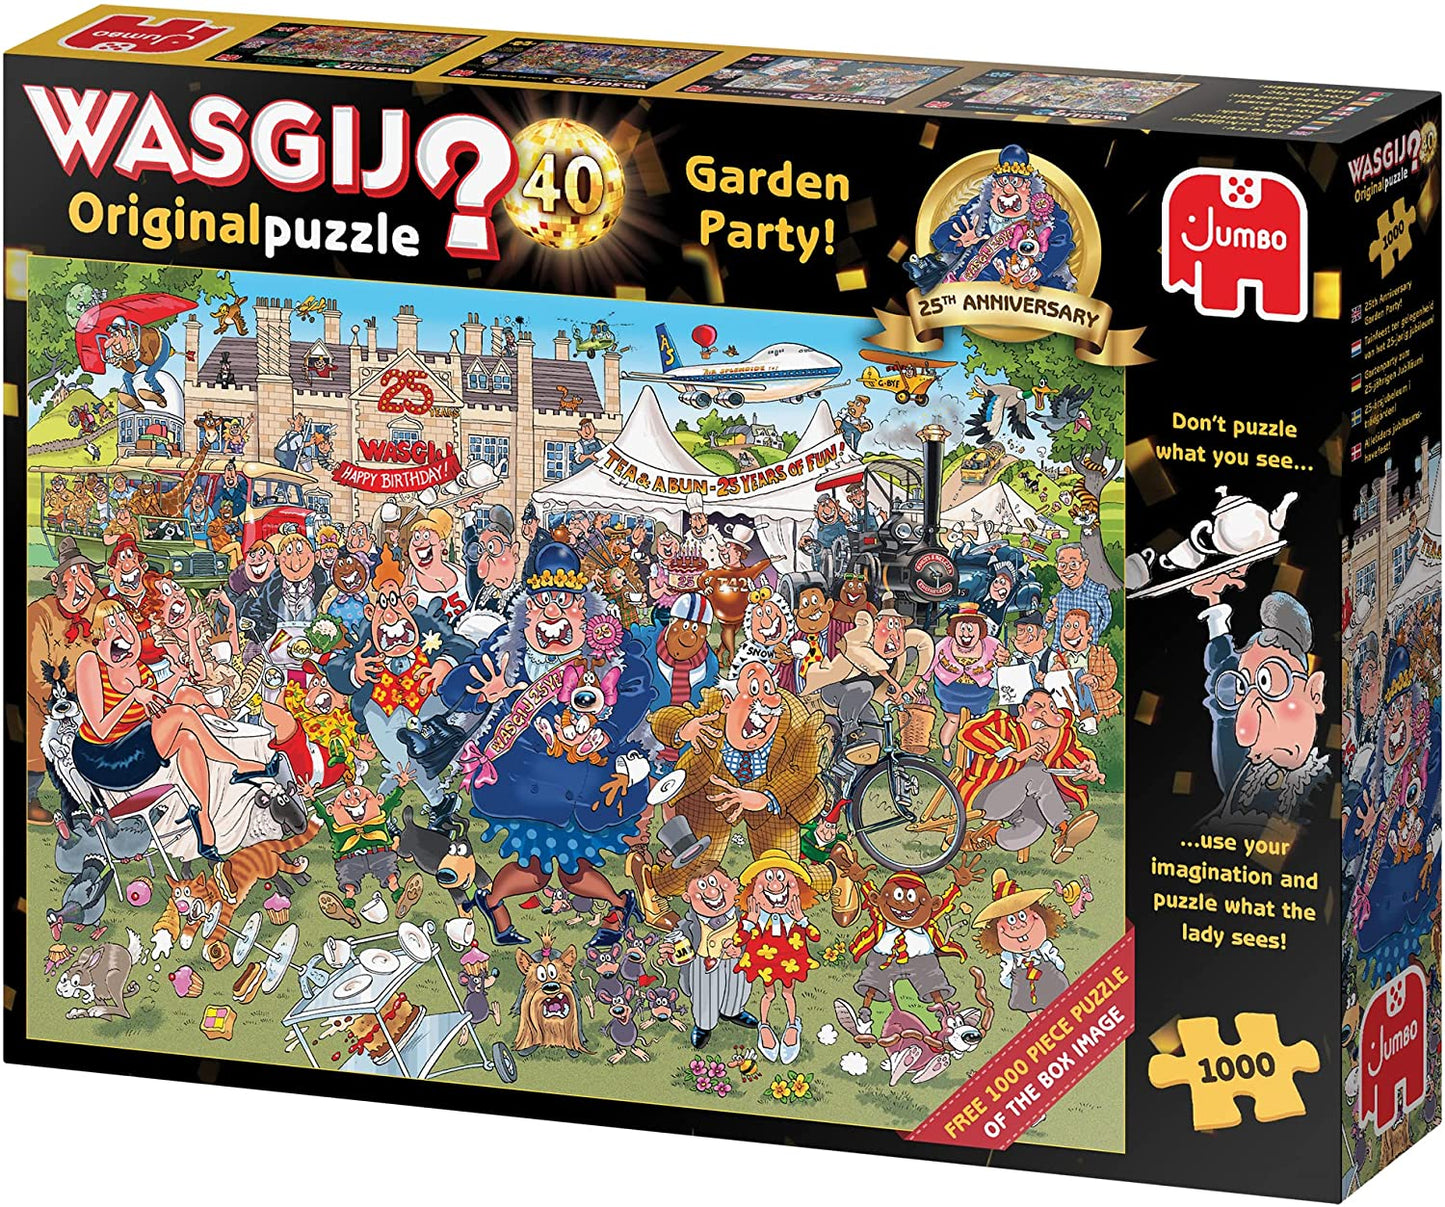 Wasgij Original 40 - 25th Anniversary - The Garden Party - 2 x1000 Piece Jigsaw Puzzle